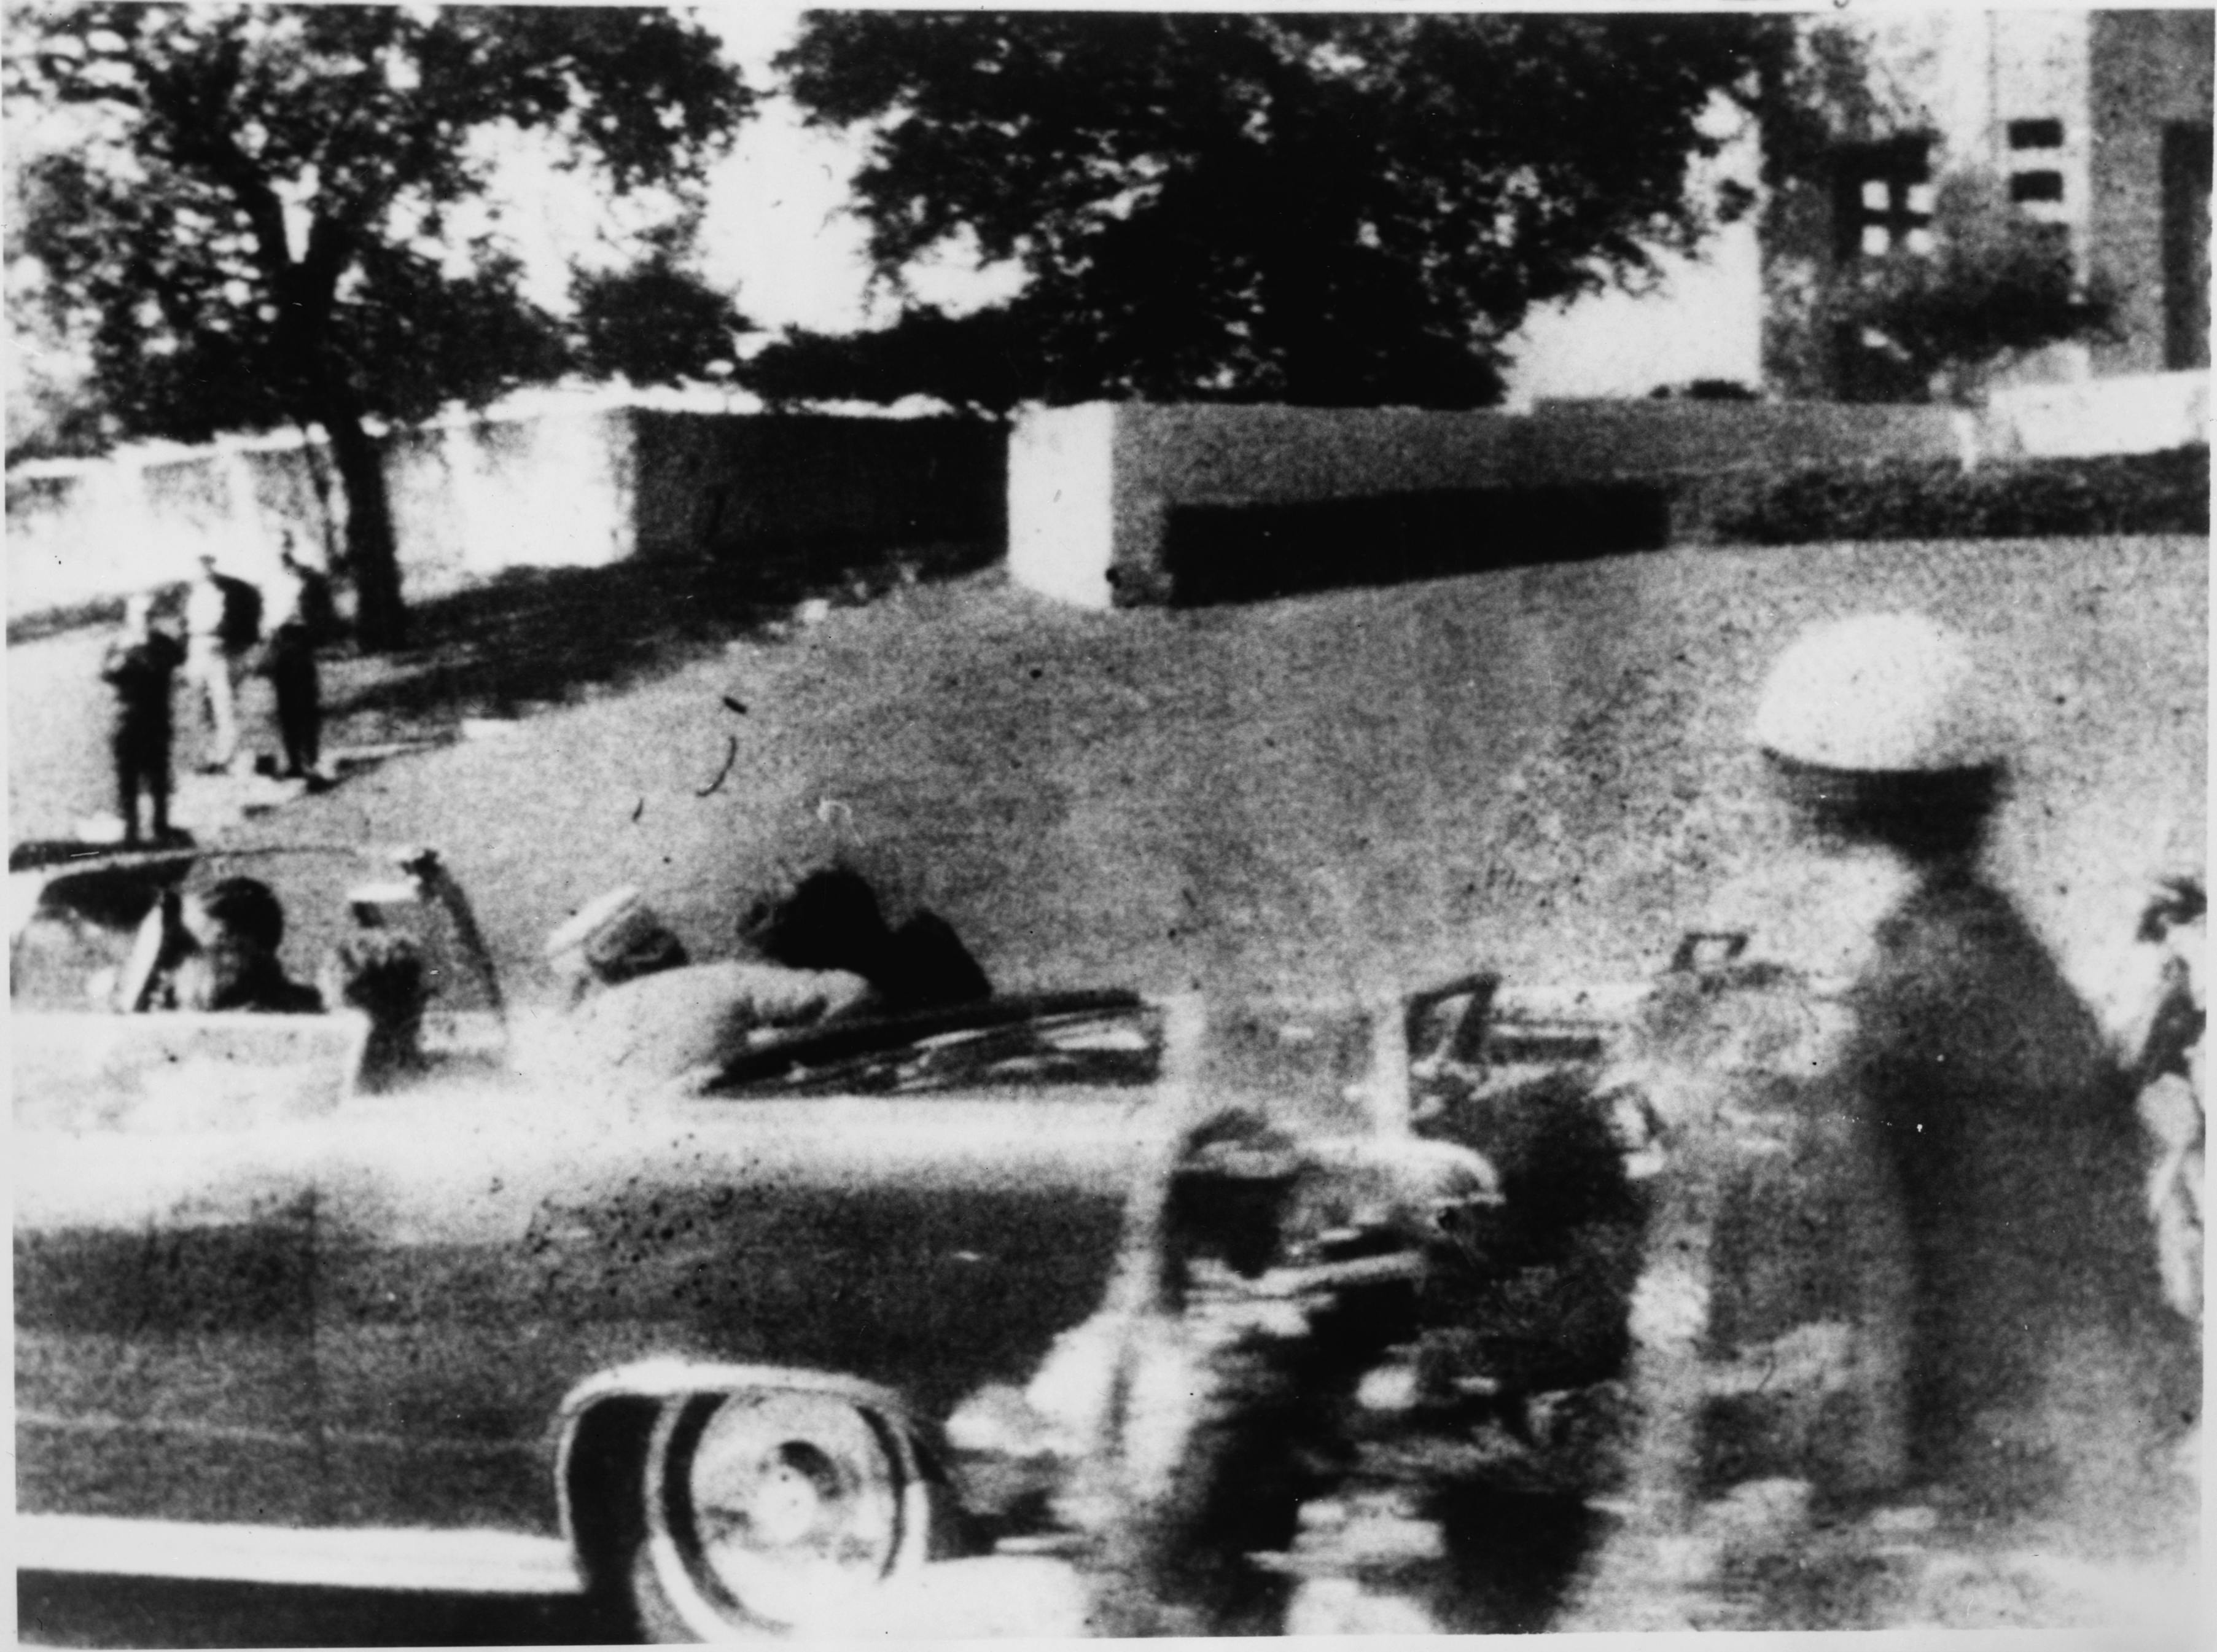 Moorman photo of JFK assassination (Mary Ann Moorman  |  wikipedia.org)